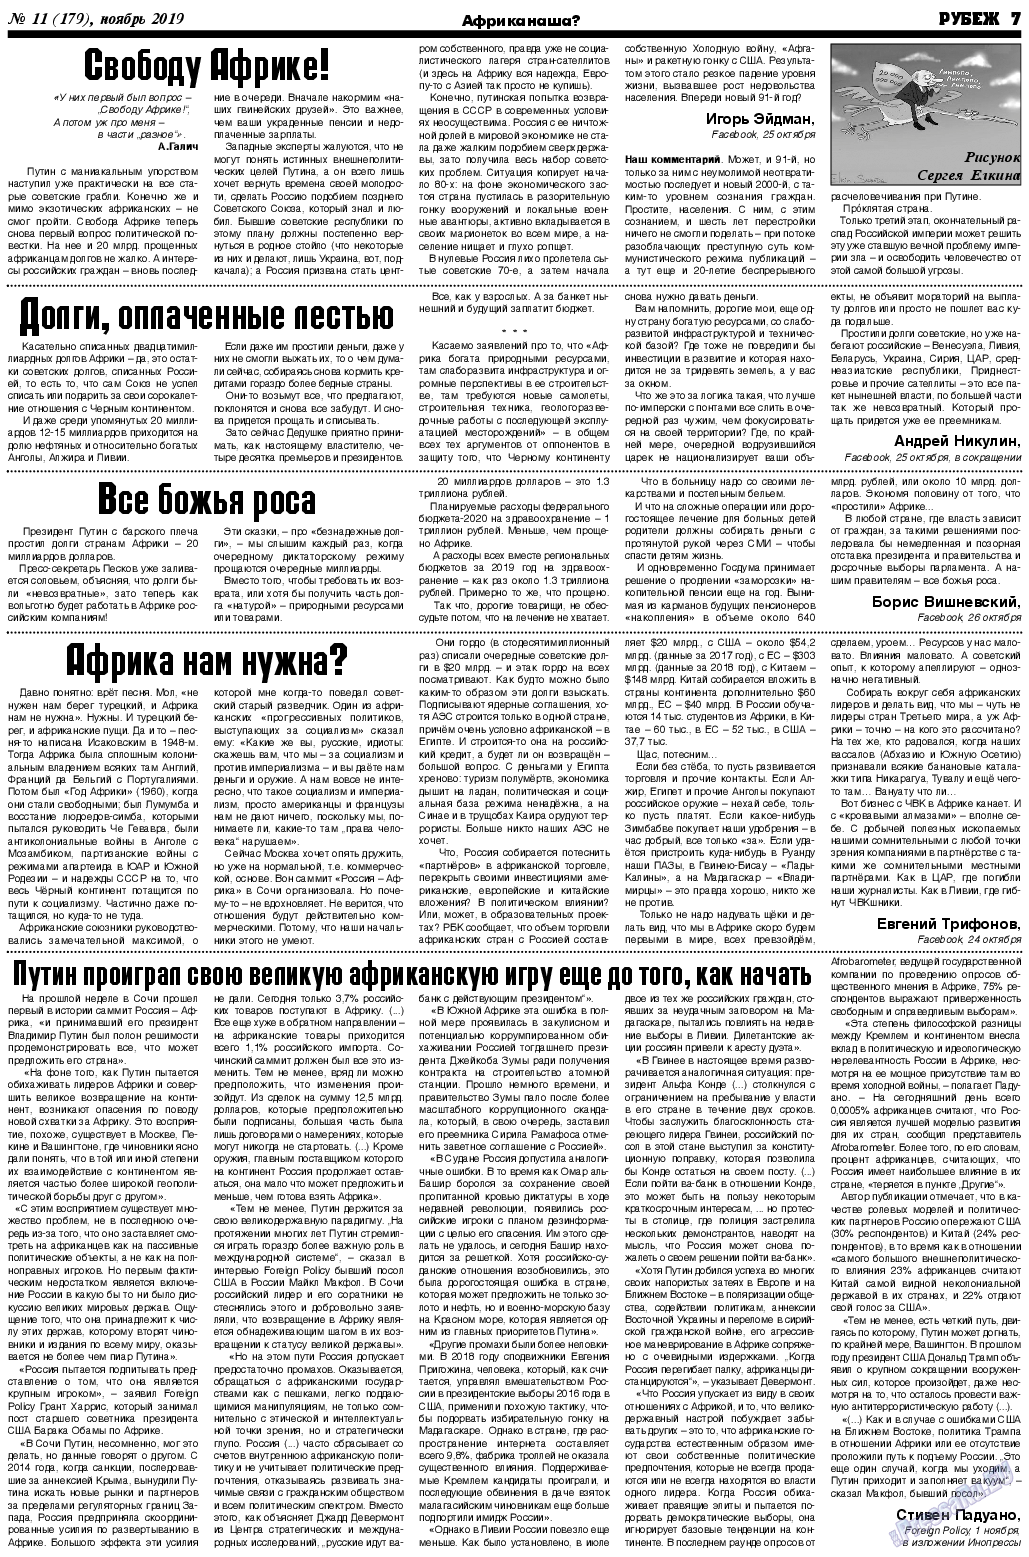 Рубеж, газета. 2019 №11 стр.7